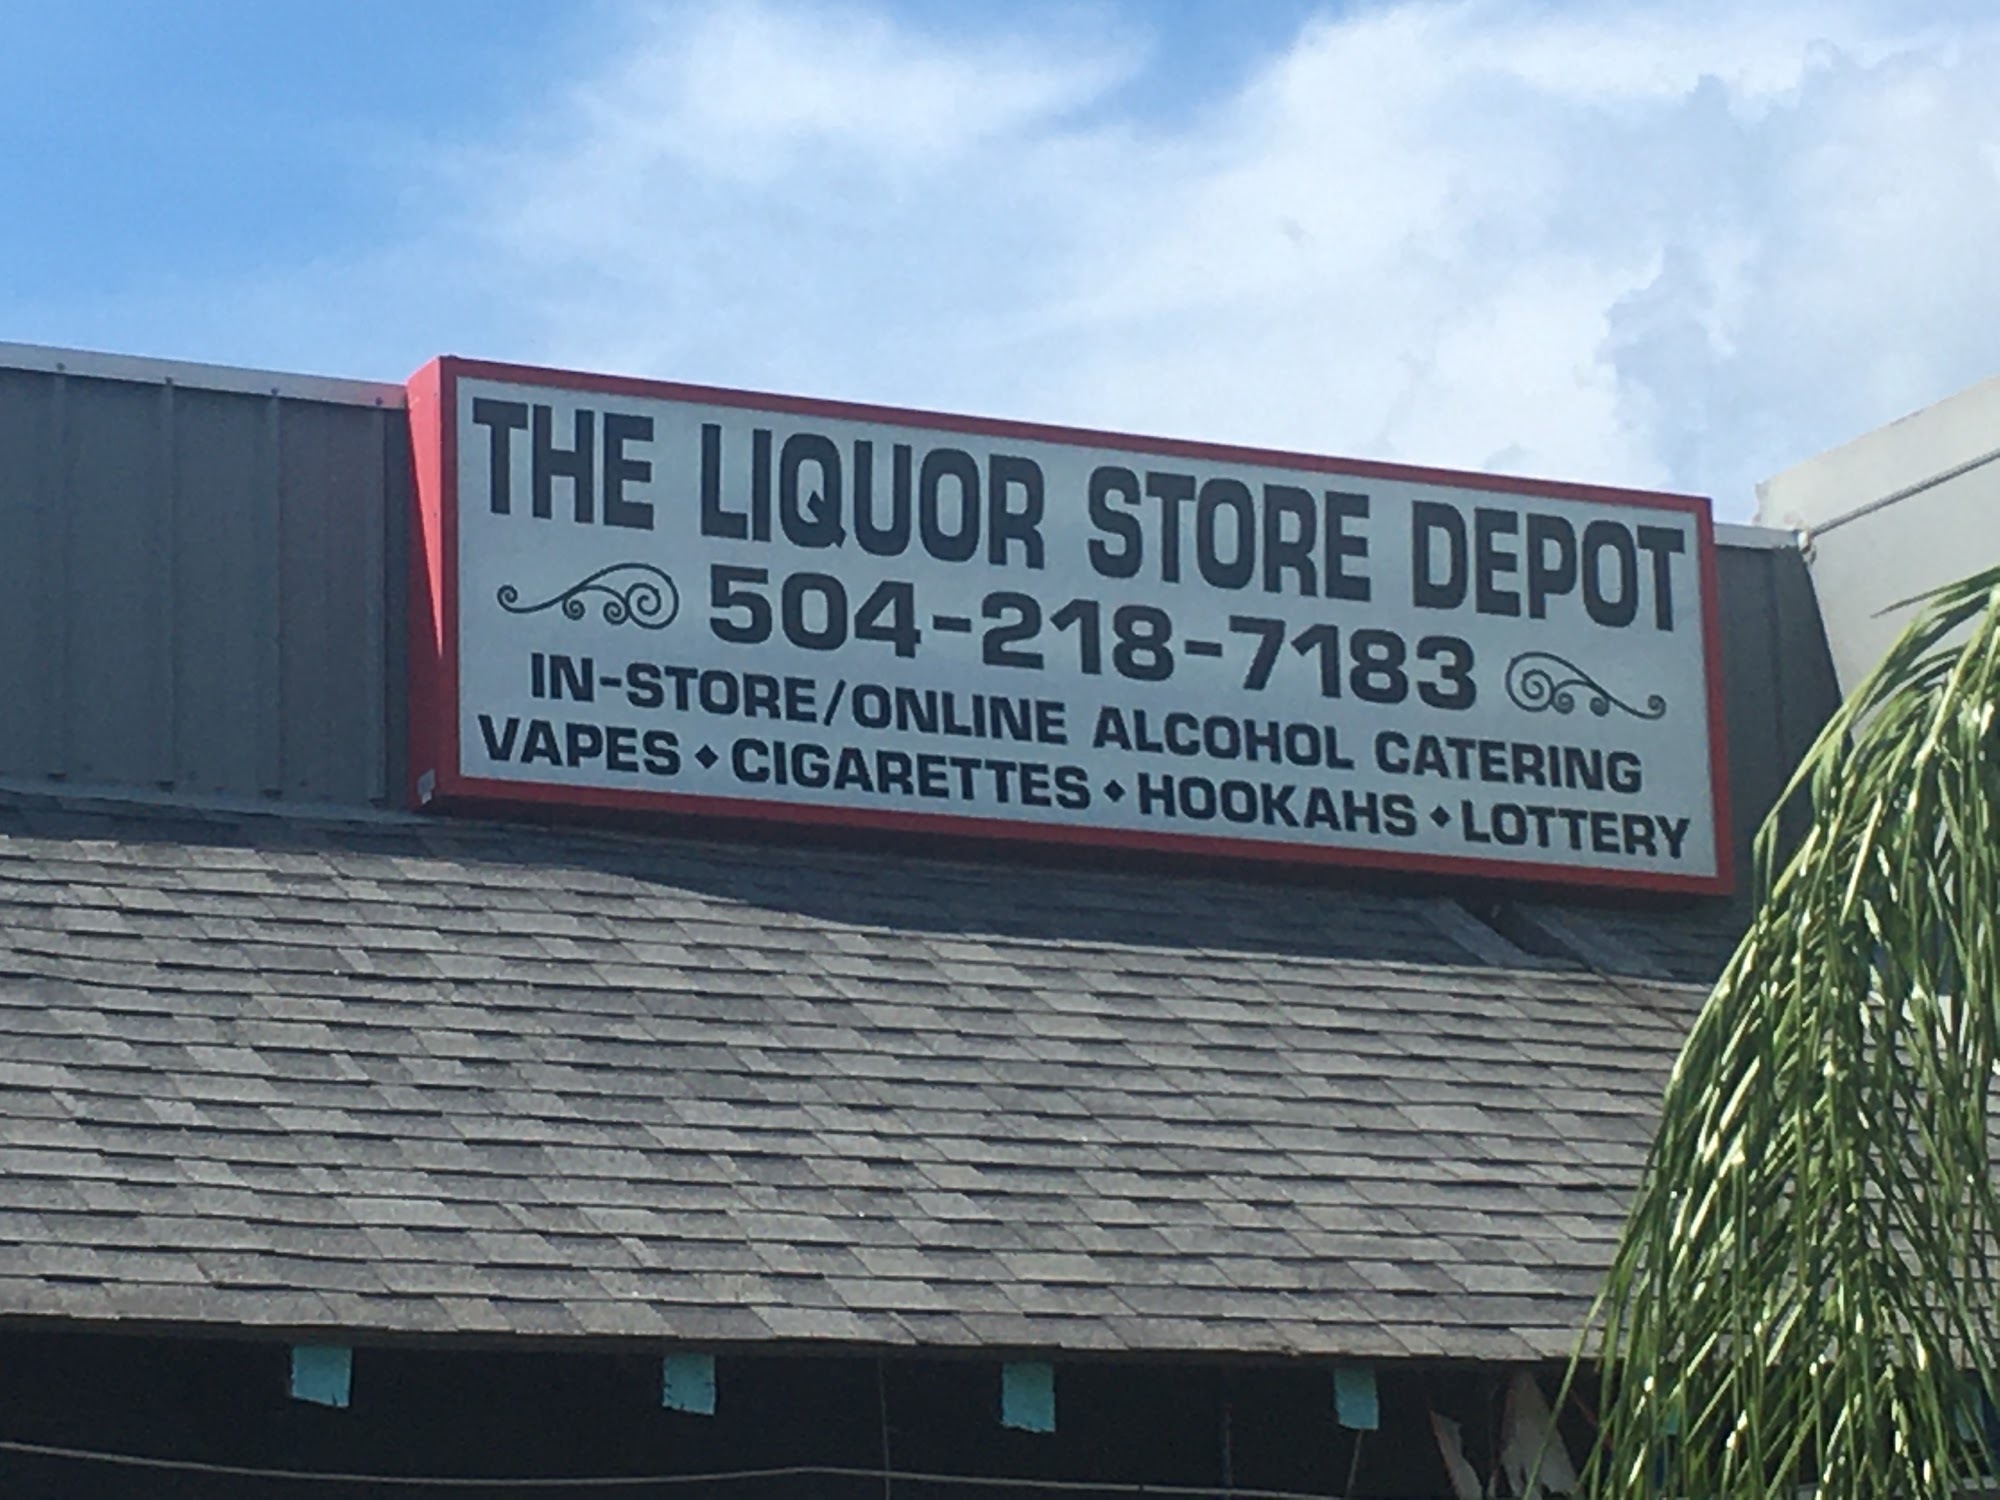 The Liquor Store Depot